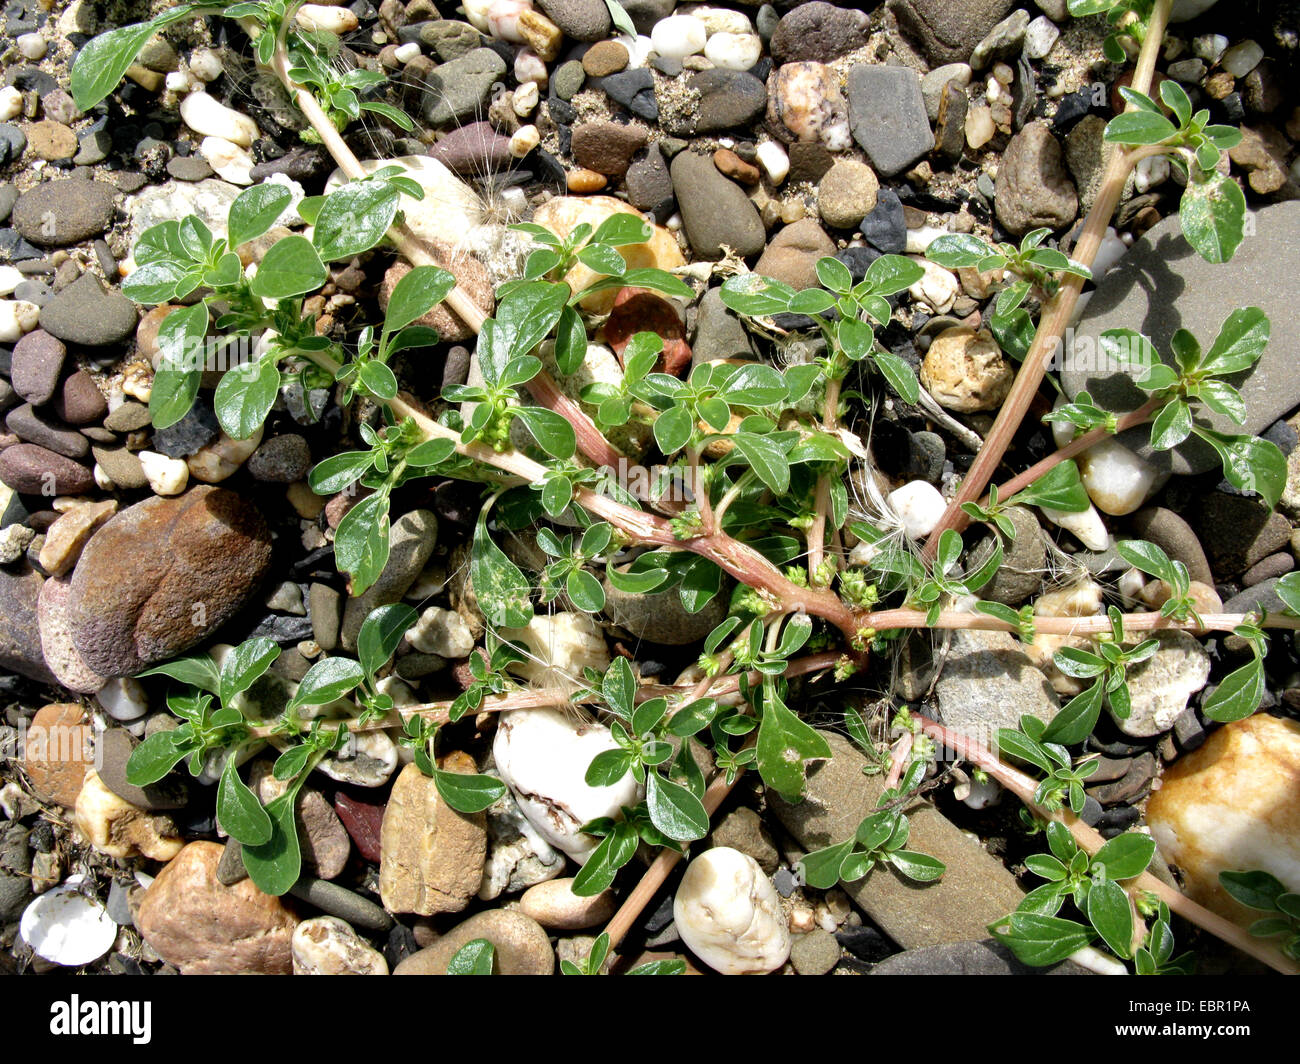 prostrate pigweed, prostrate amaranth (Amaranthus blitoides), on gravel, Germany Stock Photo